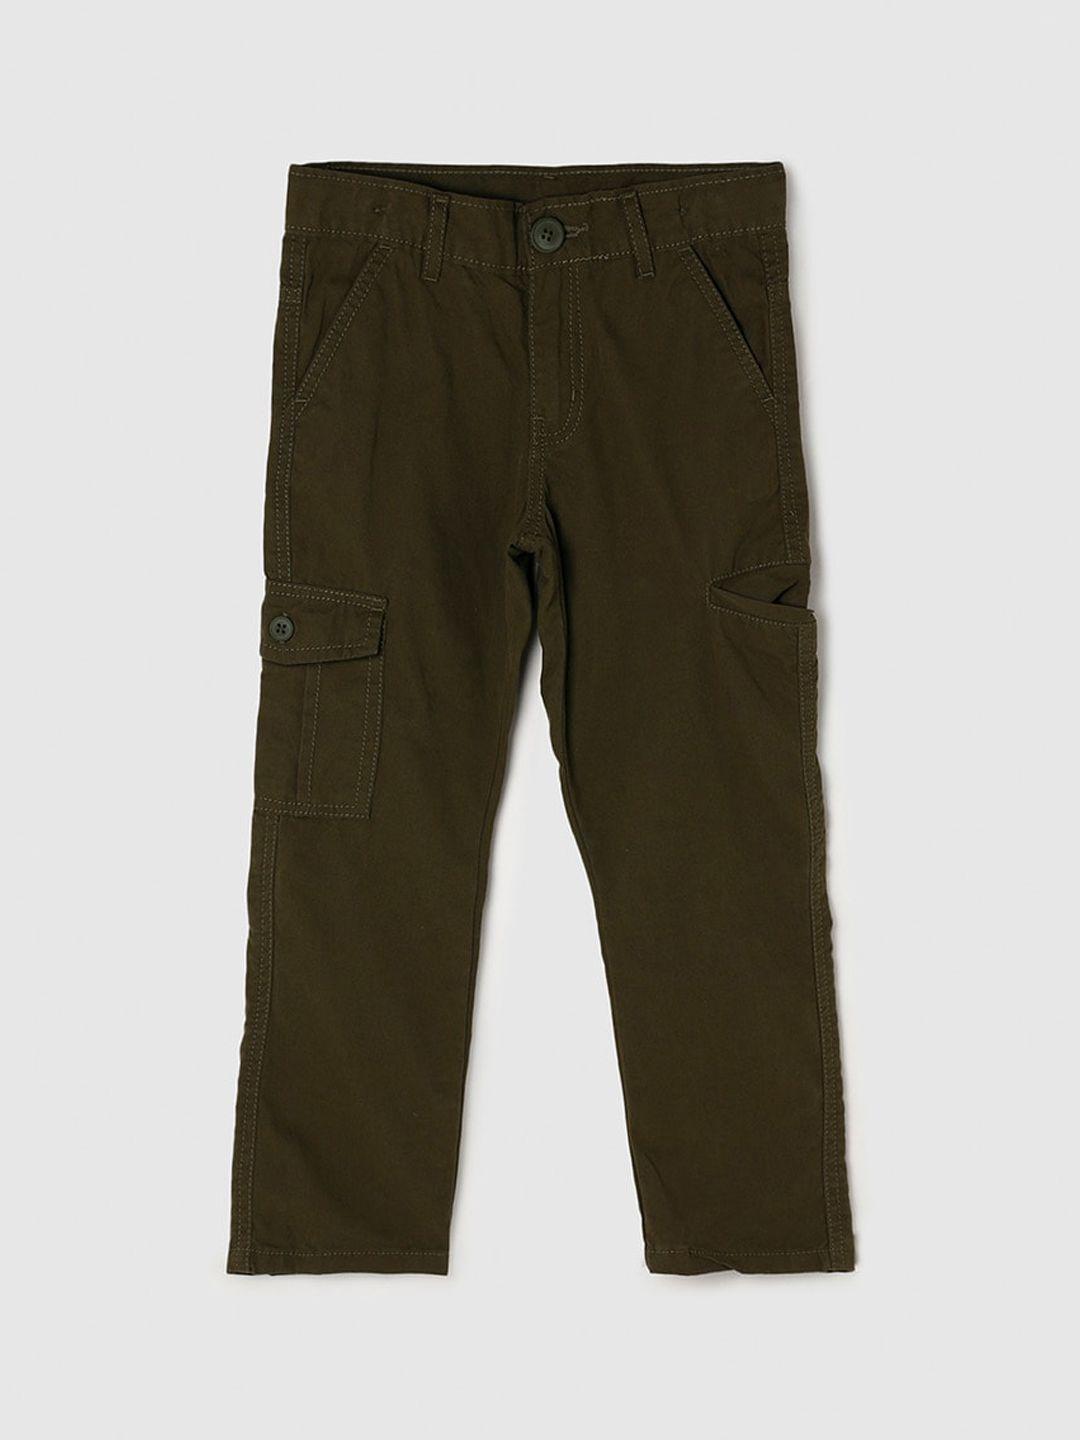 max-boys-cargos-trousers